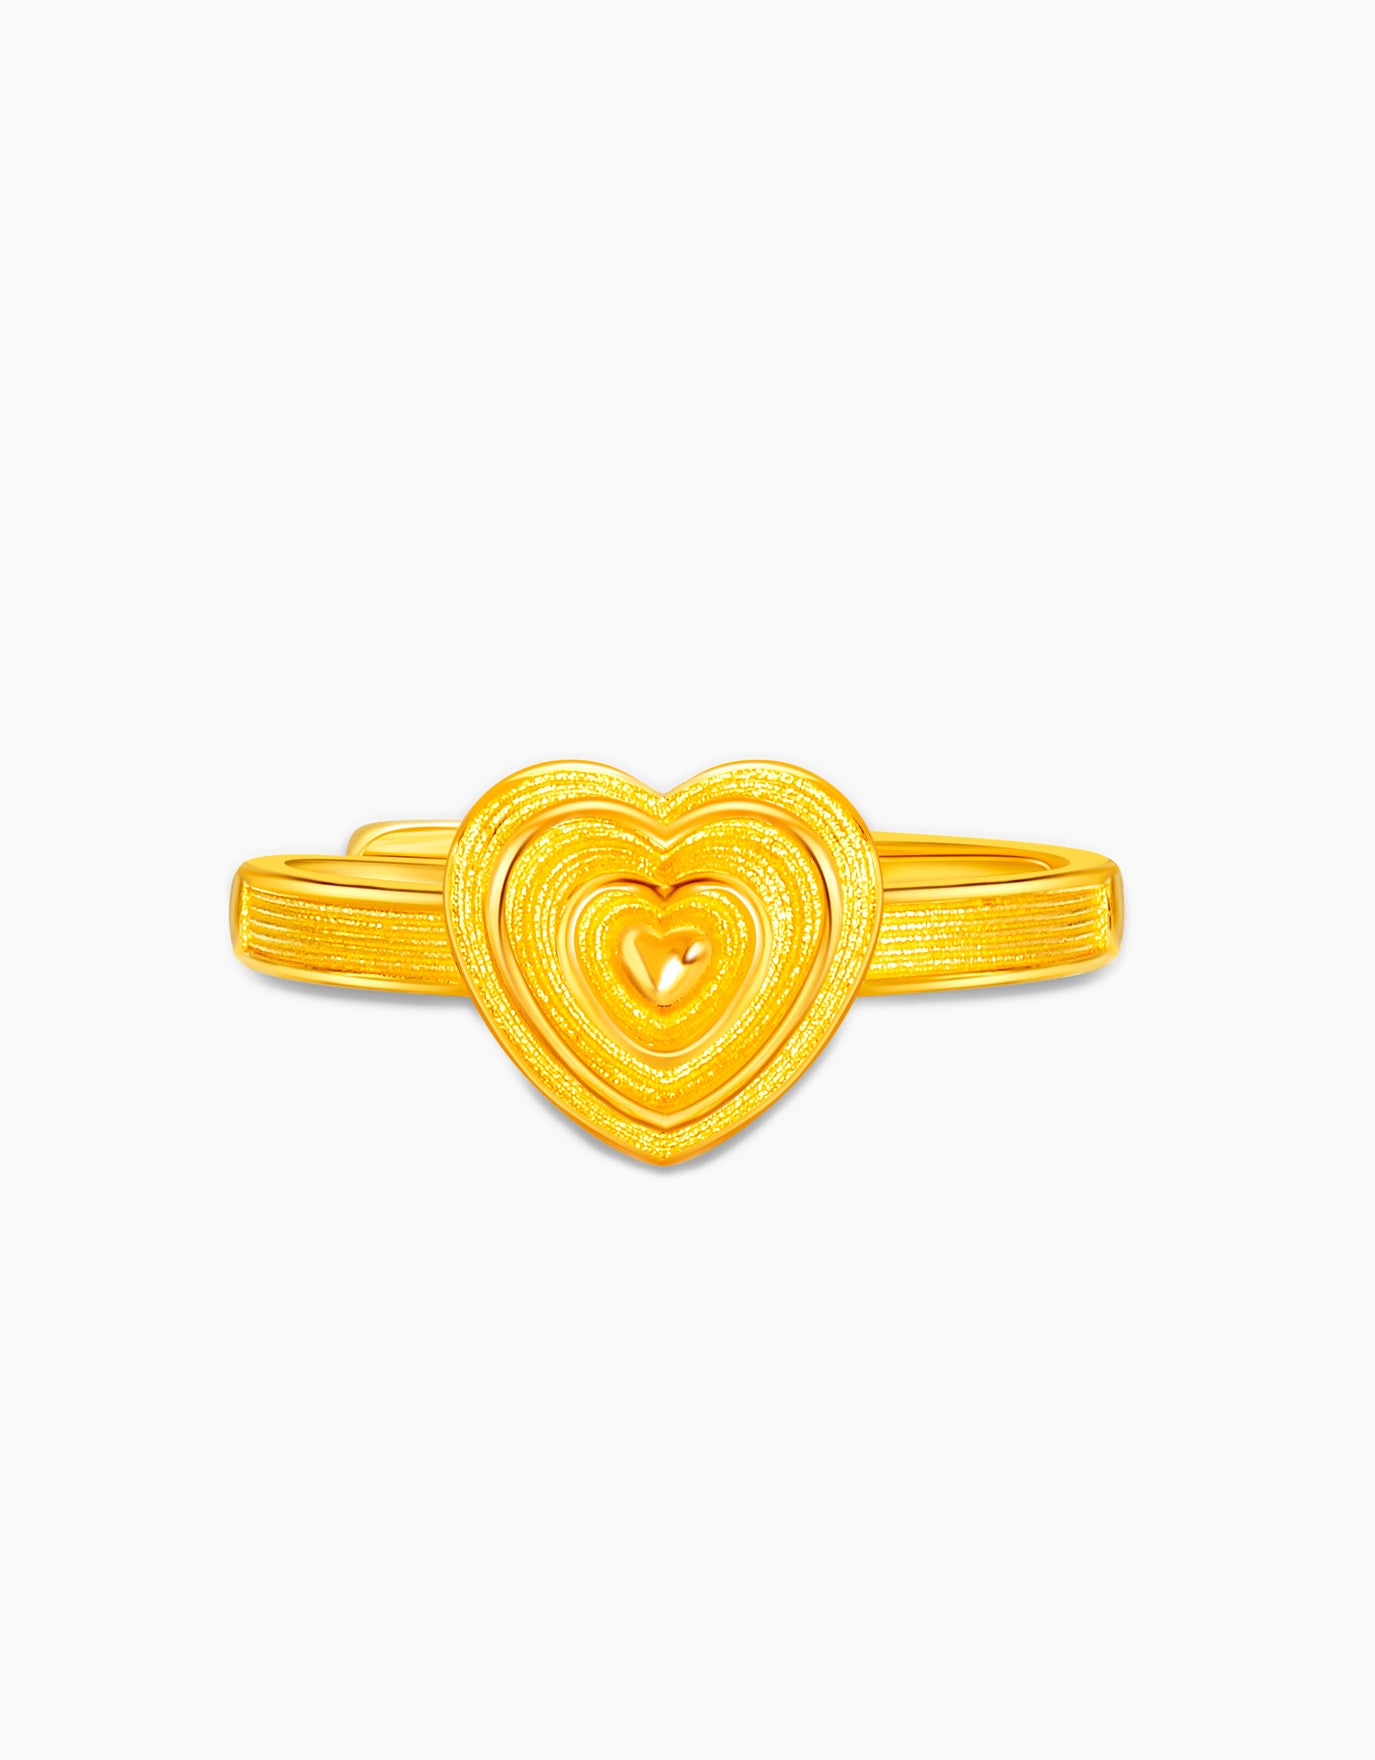 LVC 9IN Strings of Love 999 Gold Ring